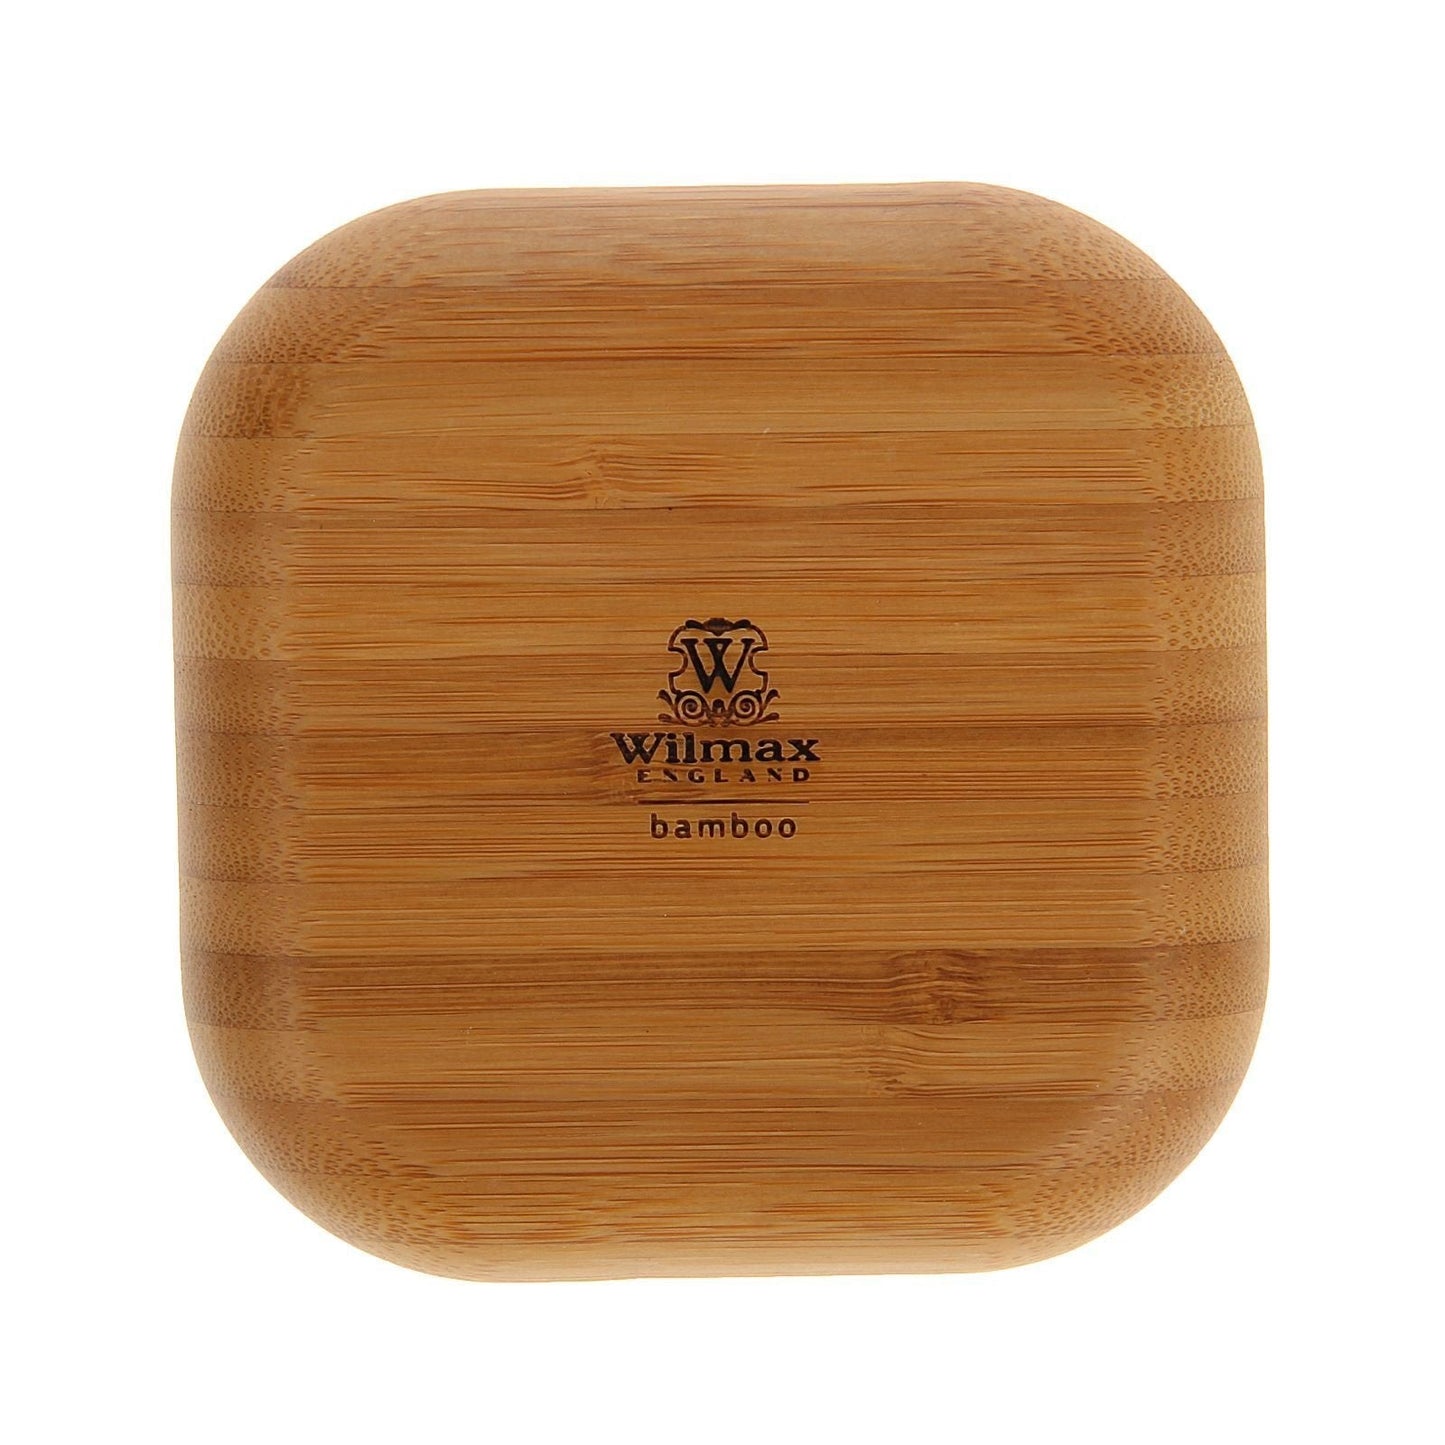 Bamboo Square Plate 4" inchX 4" inch -4